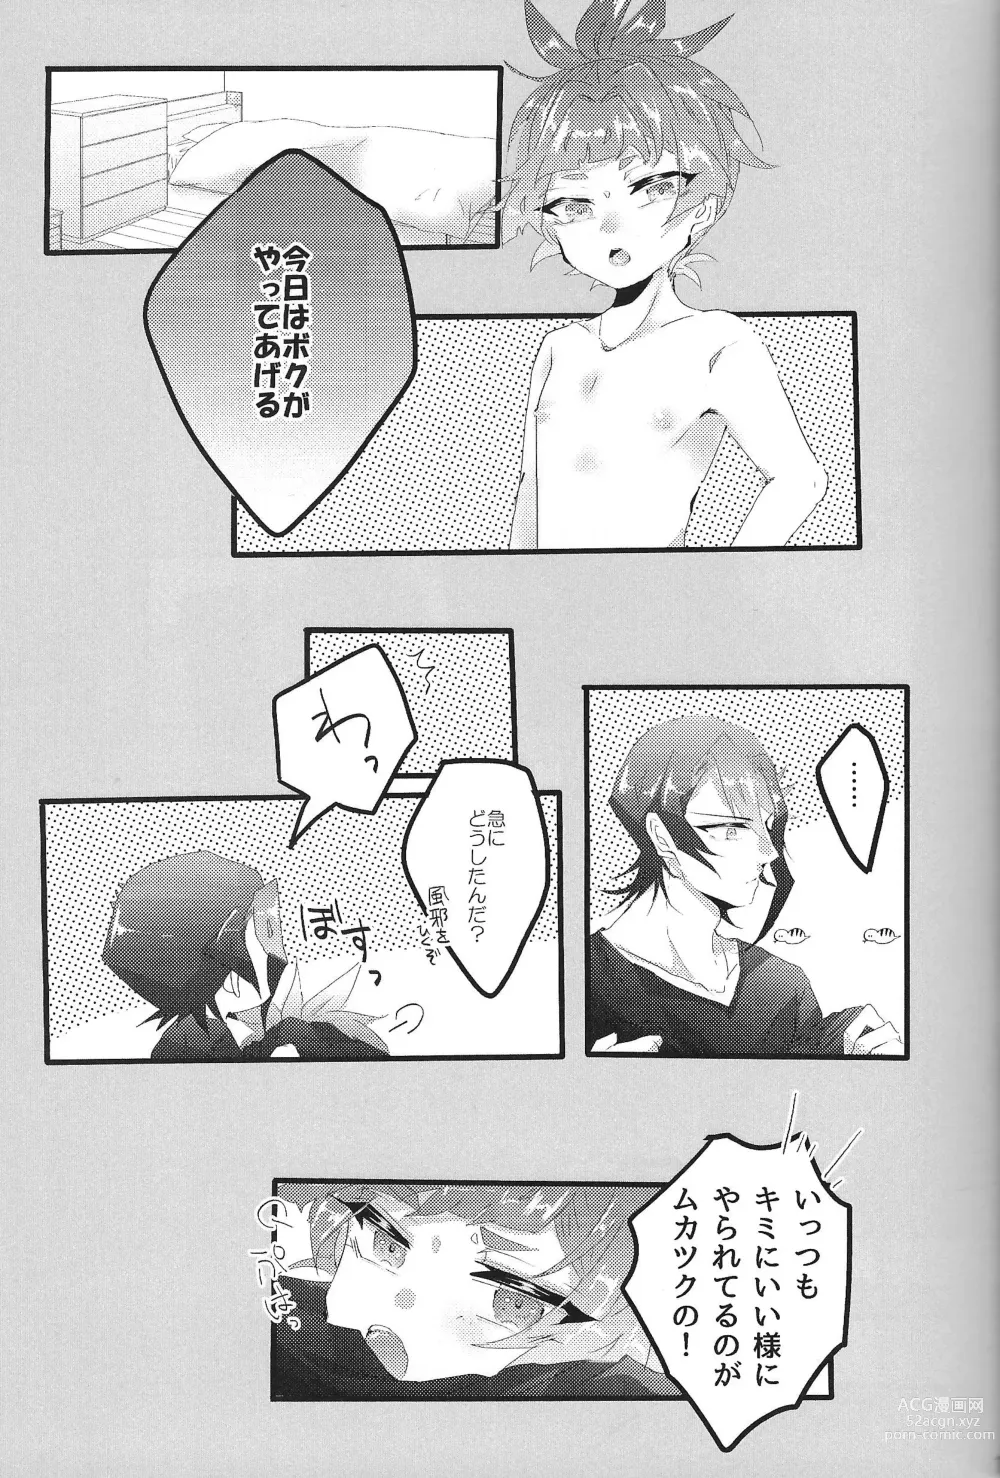 Page 6 of doujinshi Sweet Trap